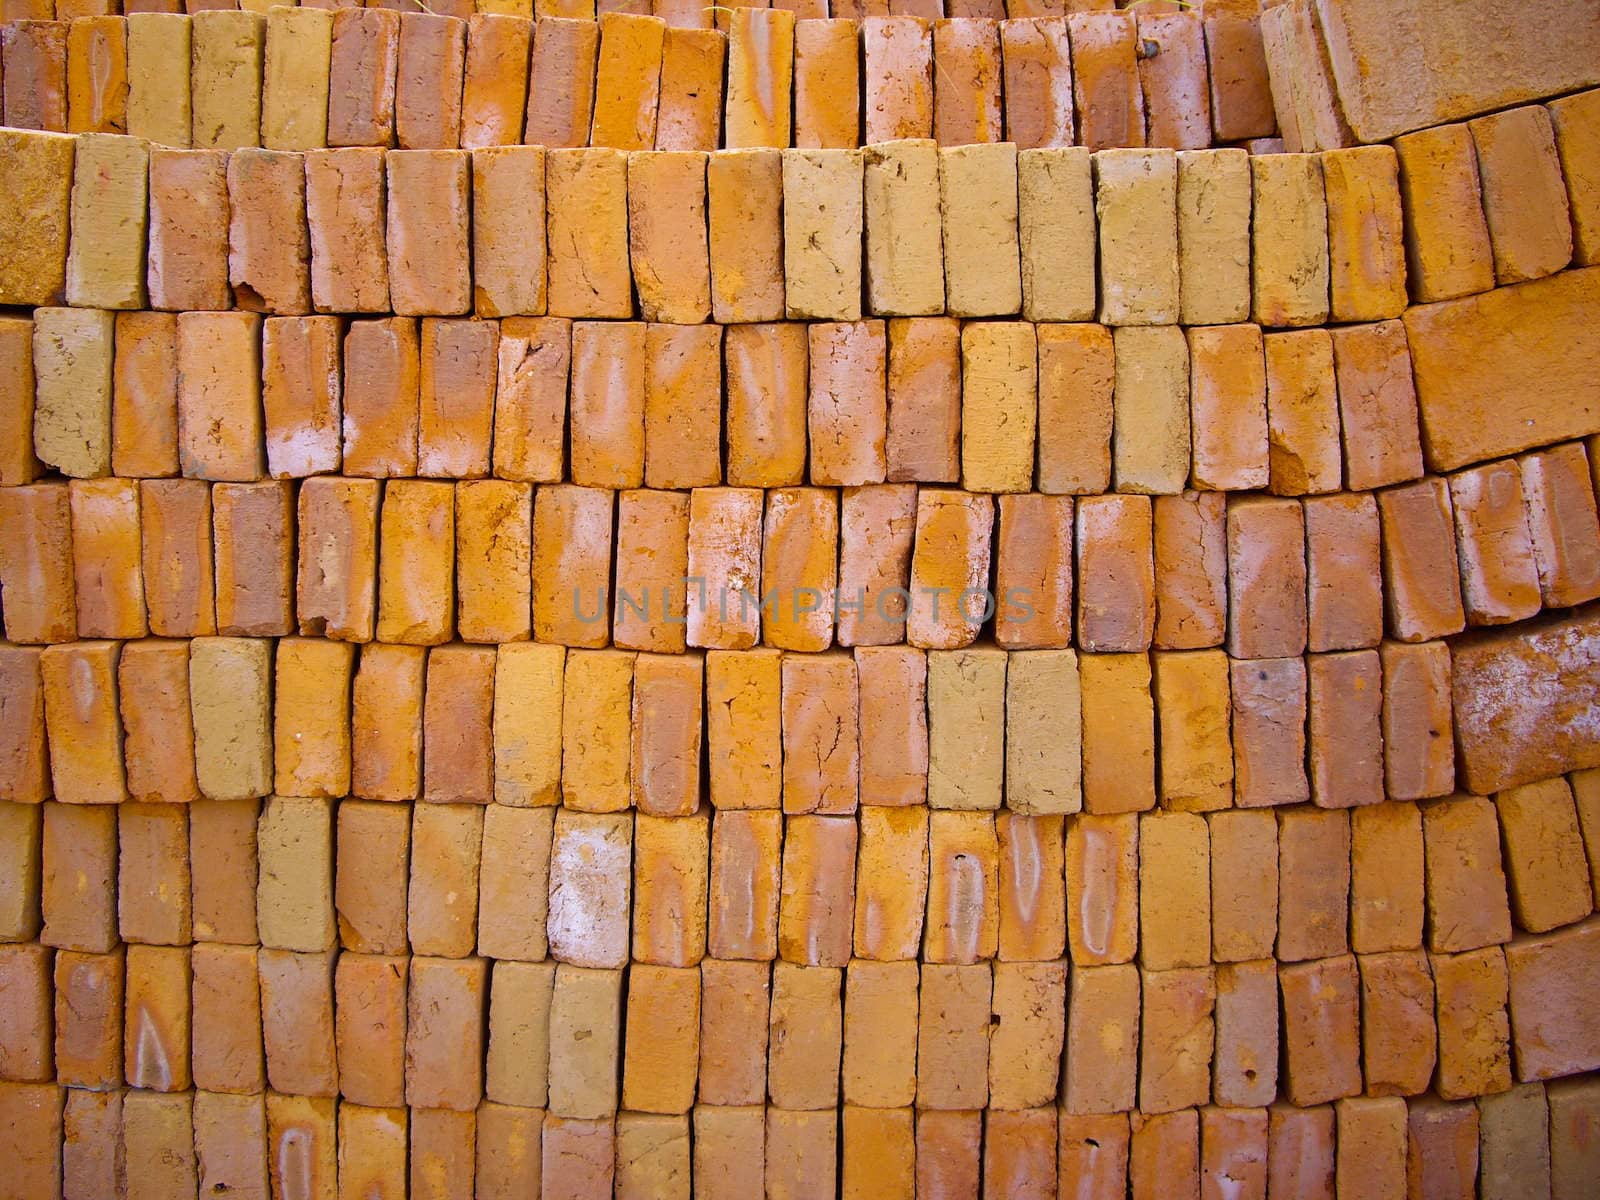 Wall of bricks by emattil